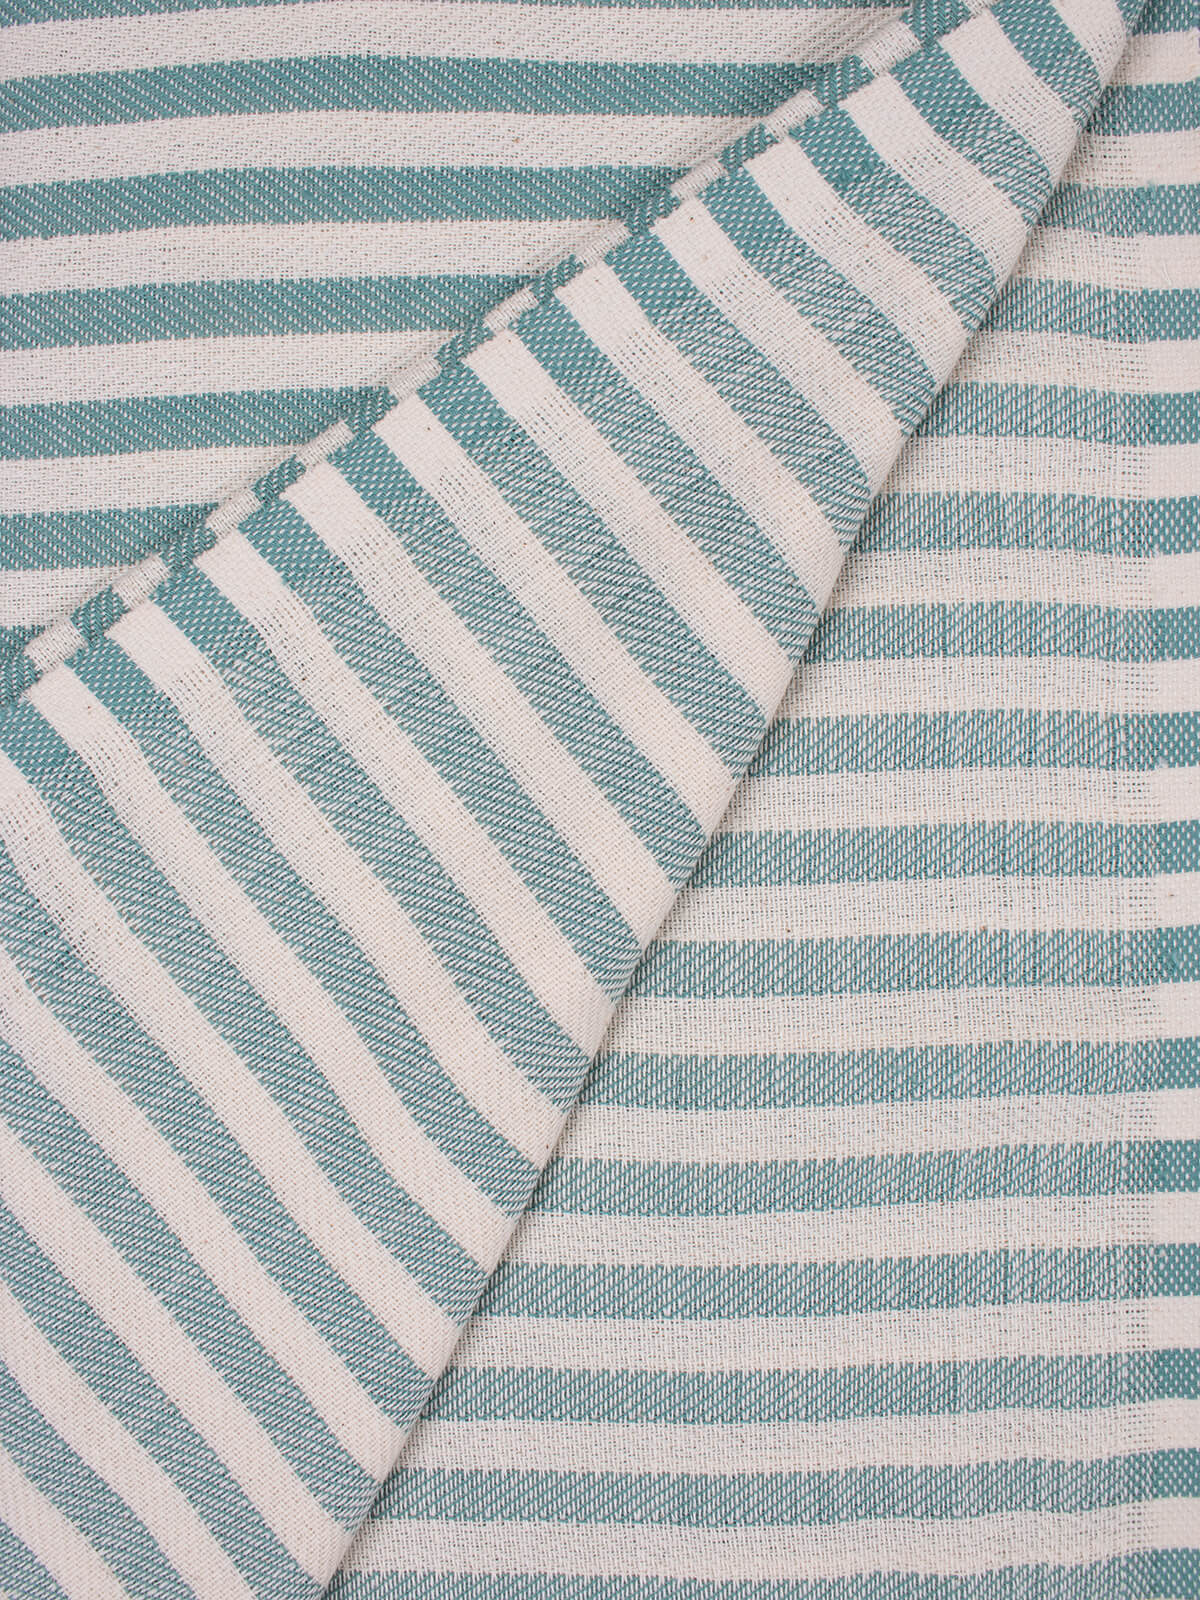 Sorrento Hammam Towel - Grey / Green